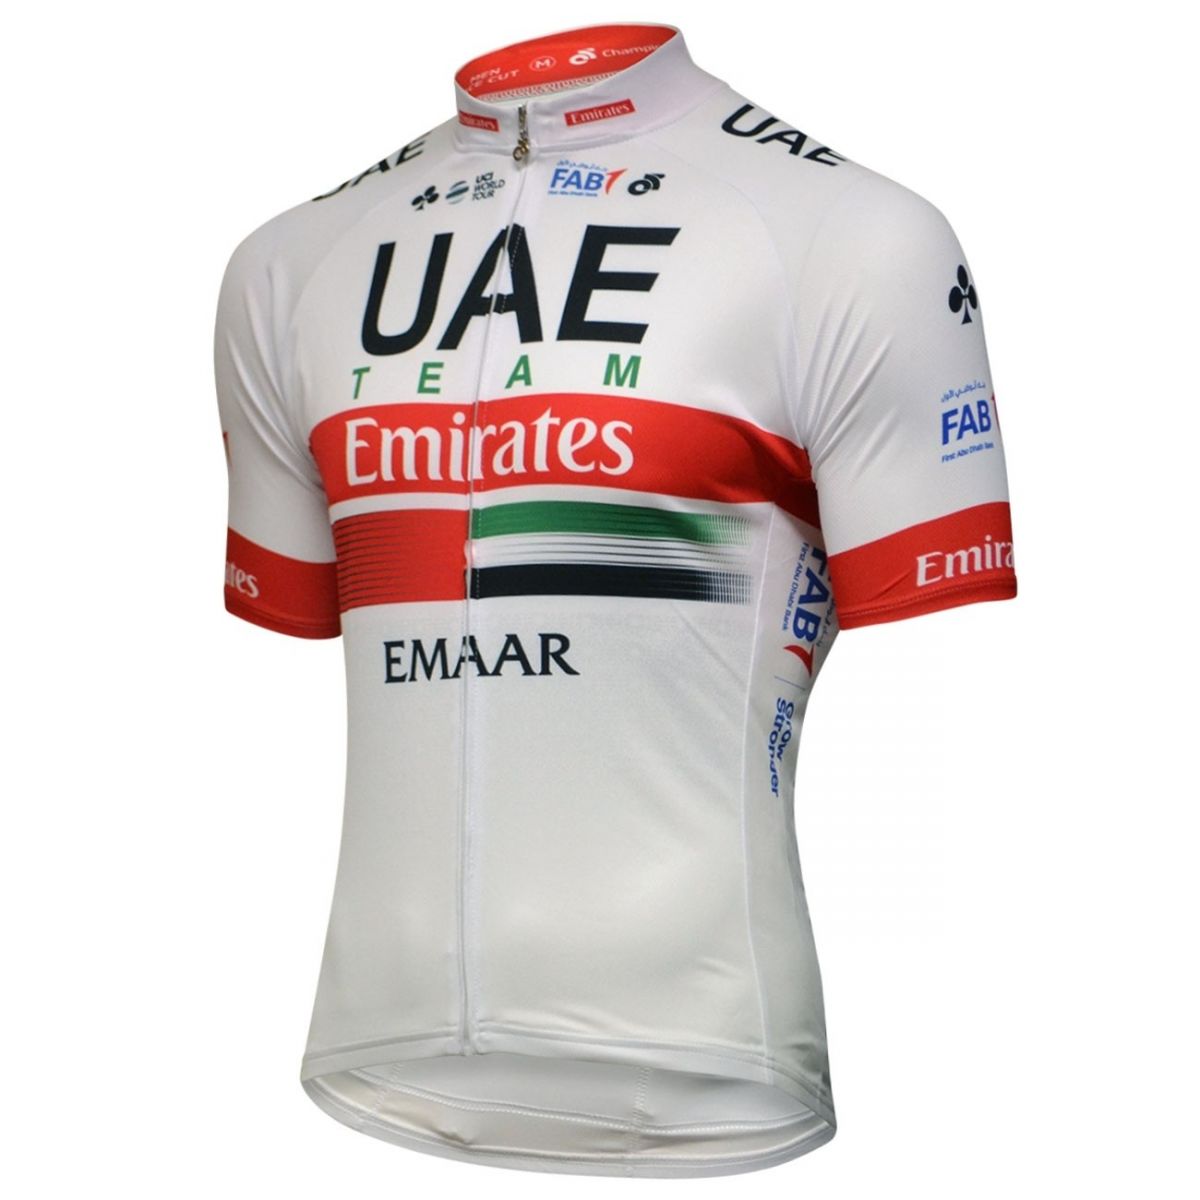 Maillot UAE Emirates